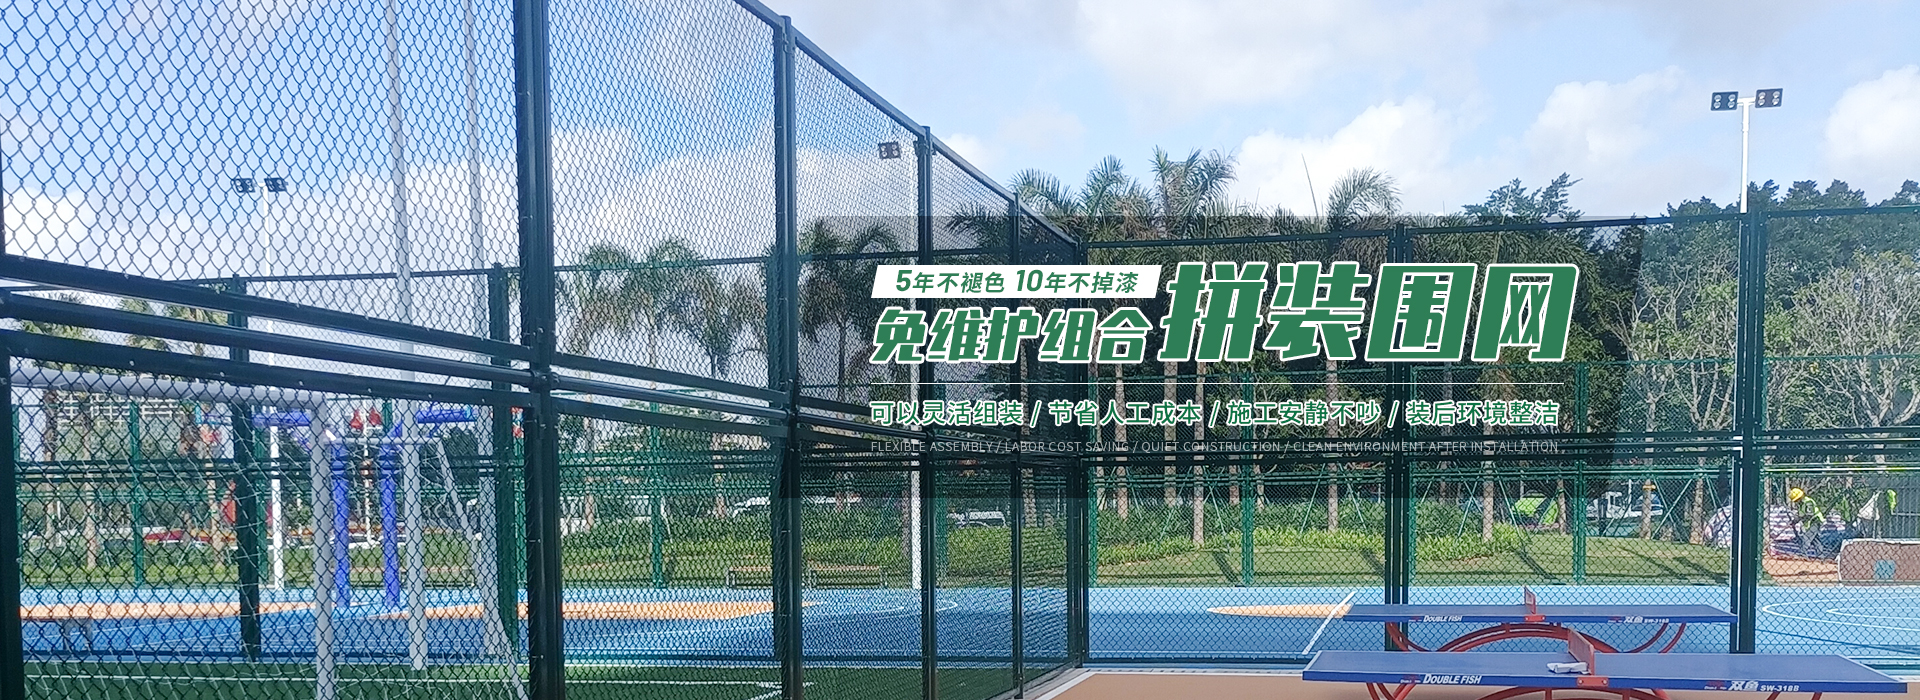 耐騰體育設備banner